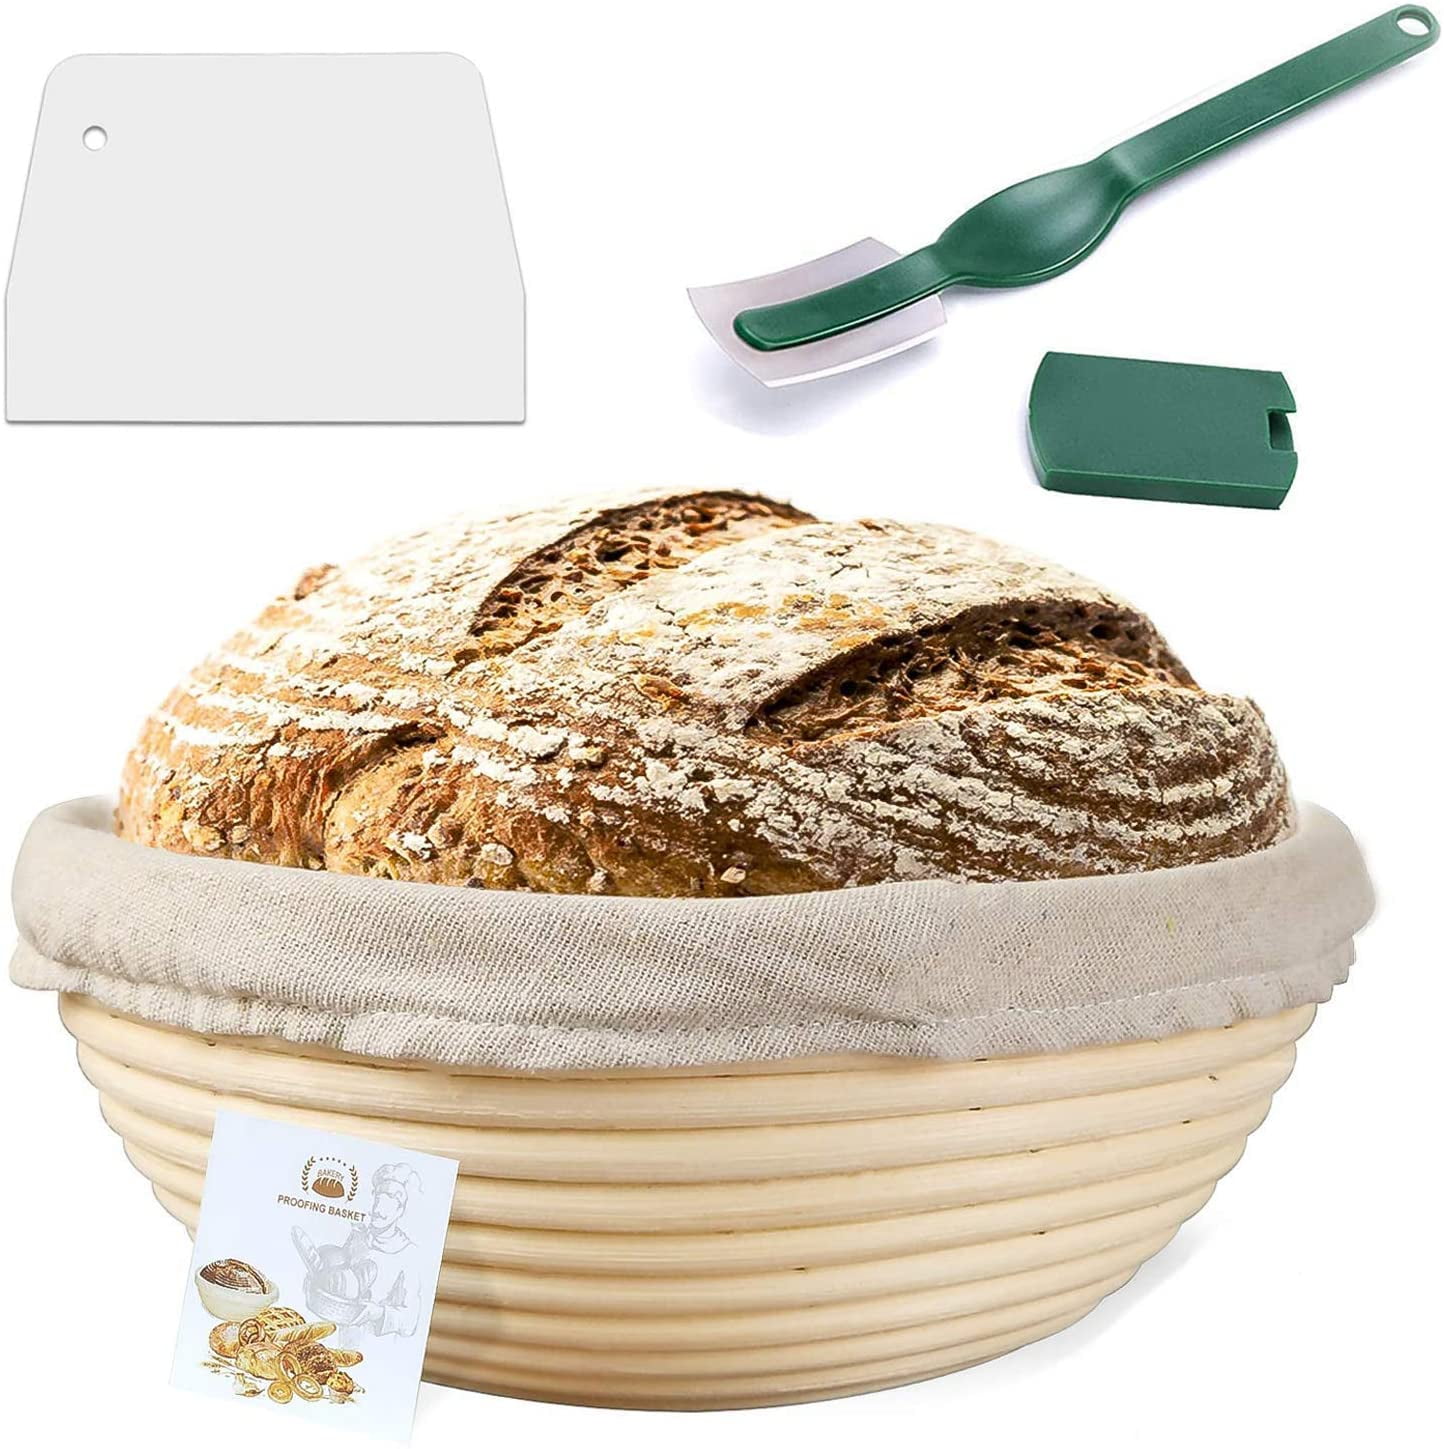 Handmade Banneton Bread Proofing Basket Brotform With Bread Lame Dough Scraper 